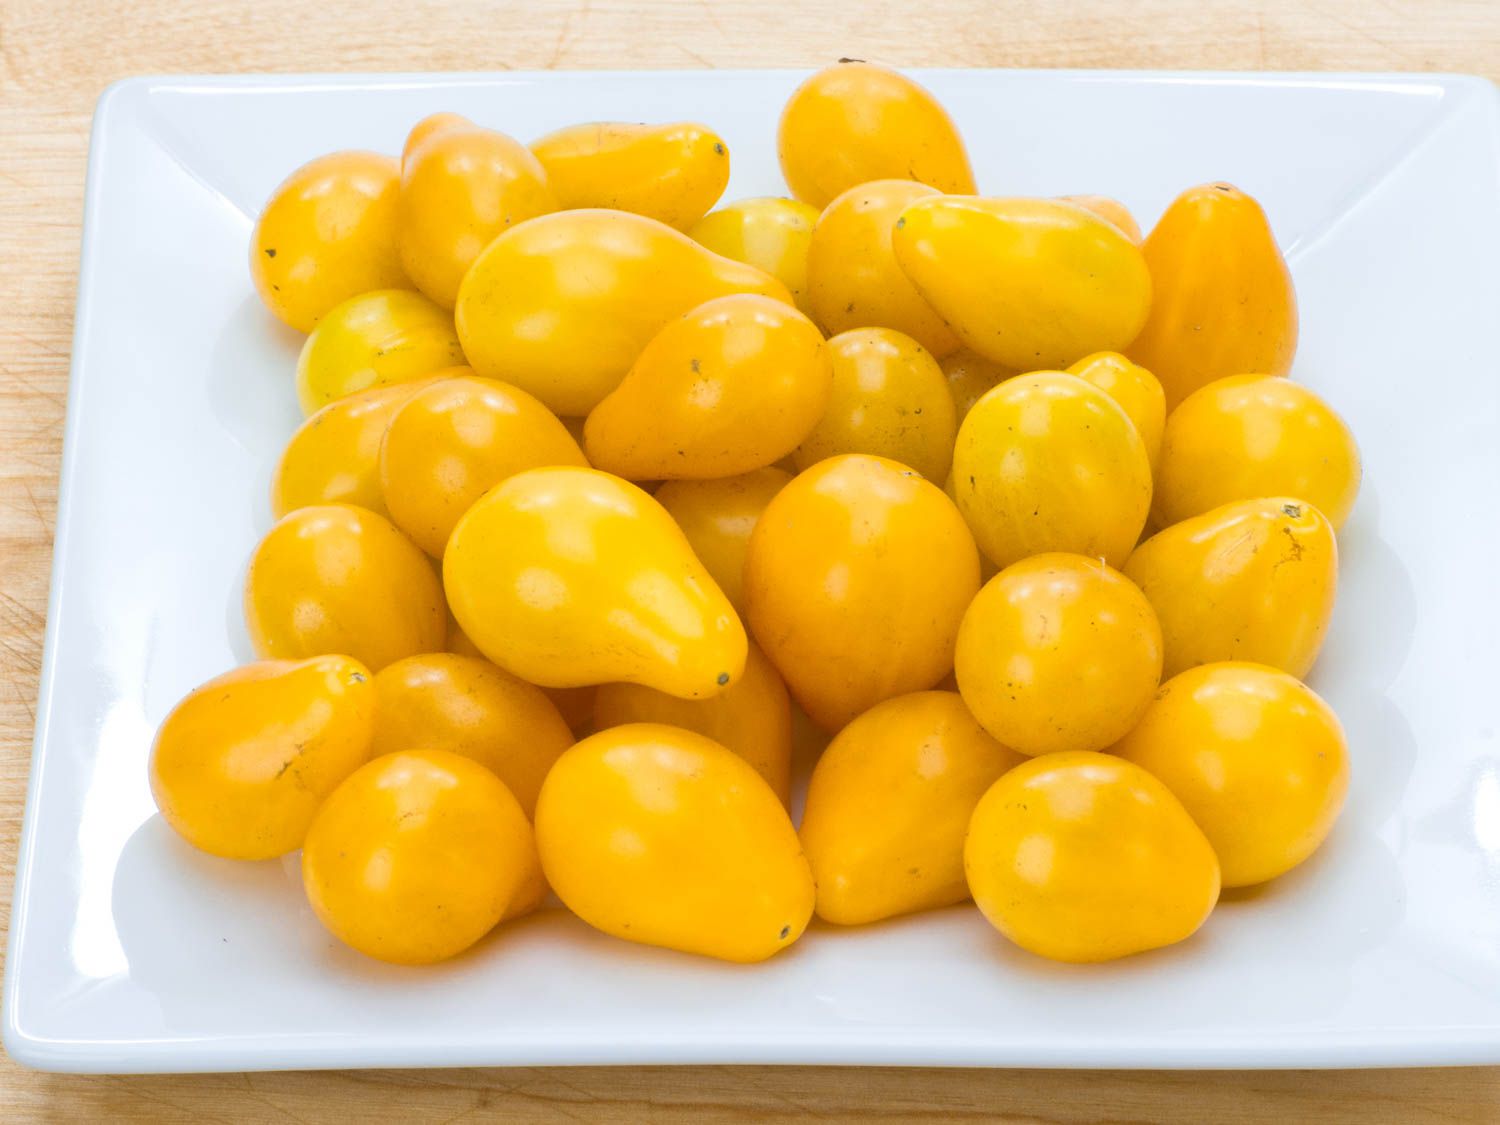 20150622-tomato-guide-yellow-pear-shutterstock.jpg